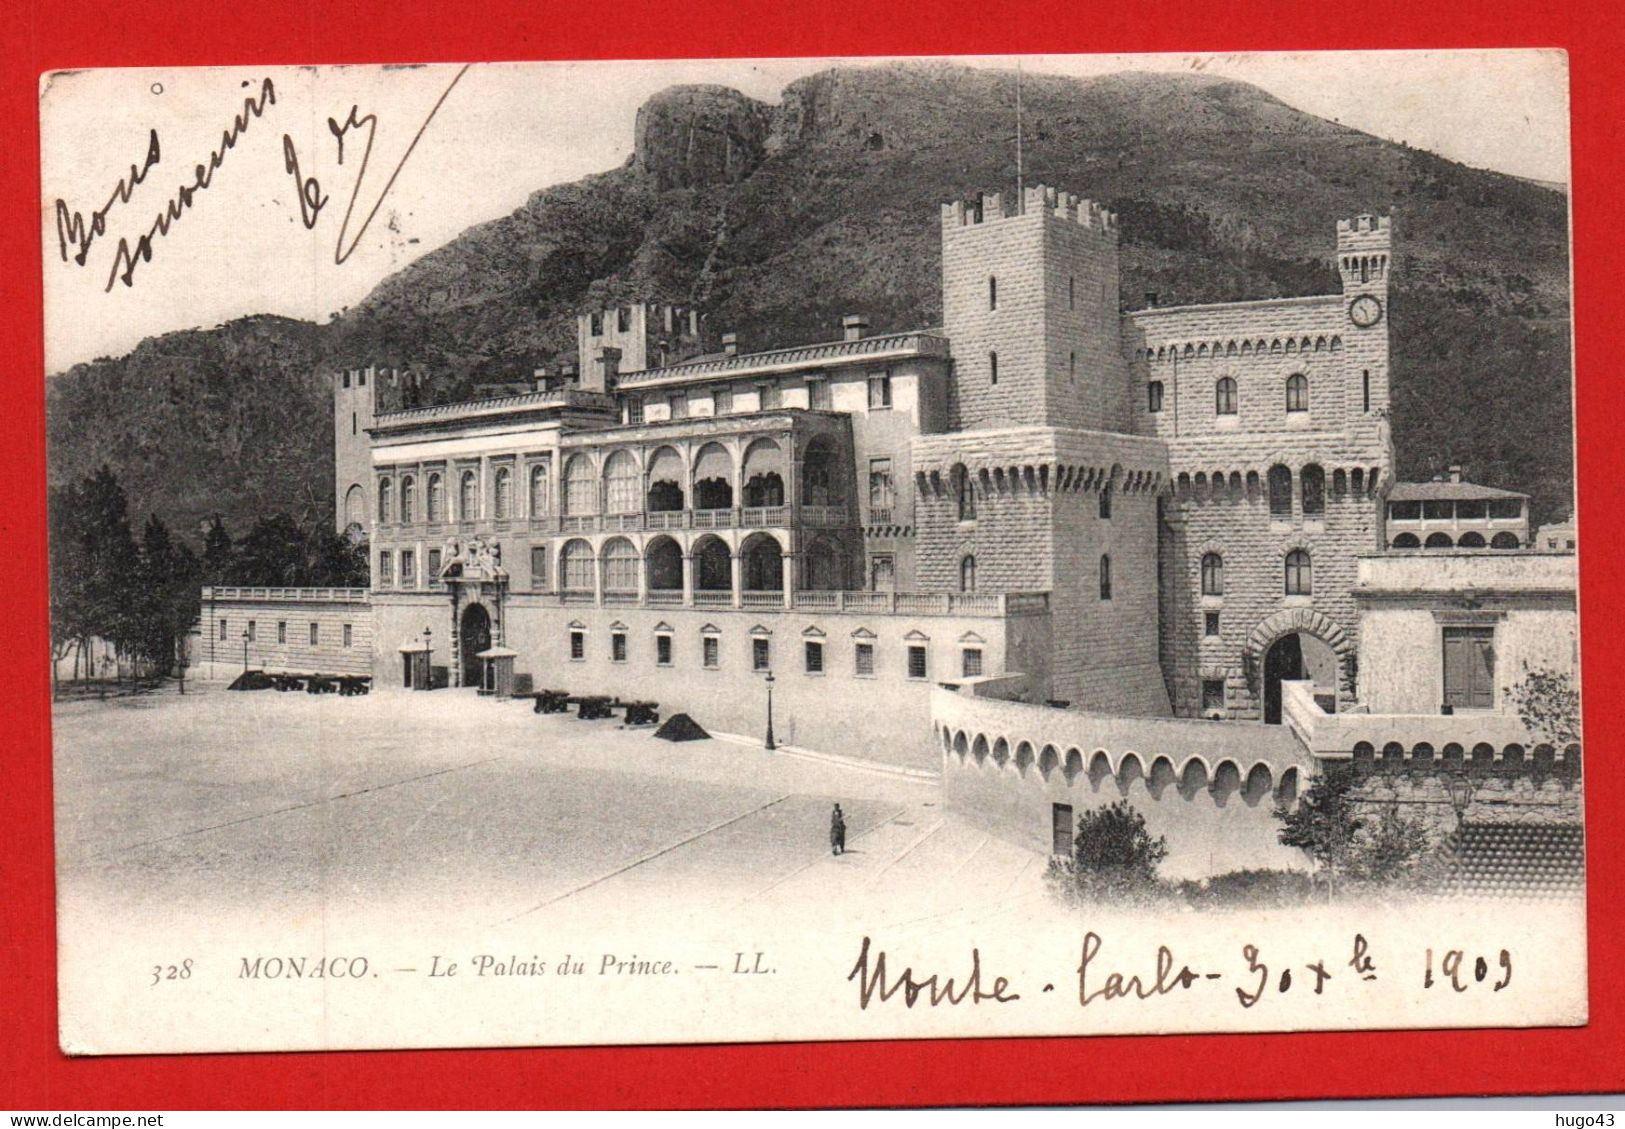 (RECTO / VERSO) MONACO EN 1903 - N° 328 - PALAIS DU PRINCE - BEAU TIMBRE DE MONACO ET CACHET - CPA PRECURSEUR - Prince's Palace